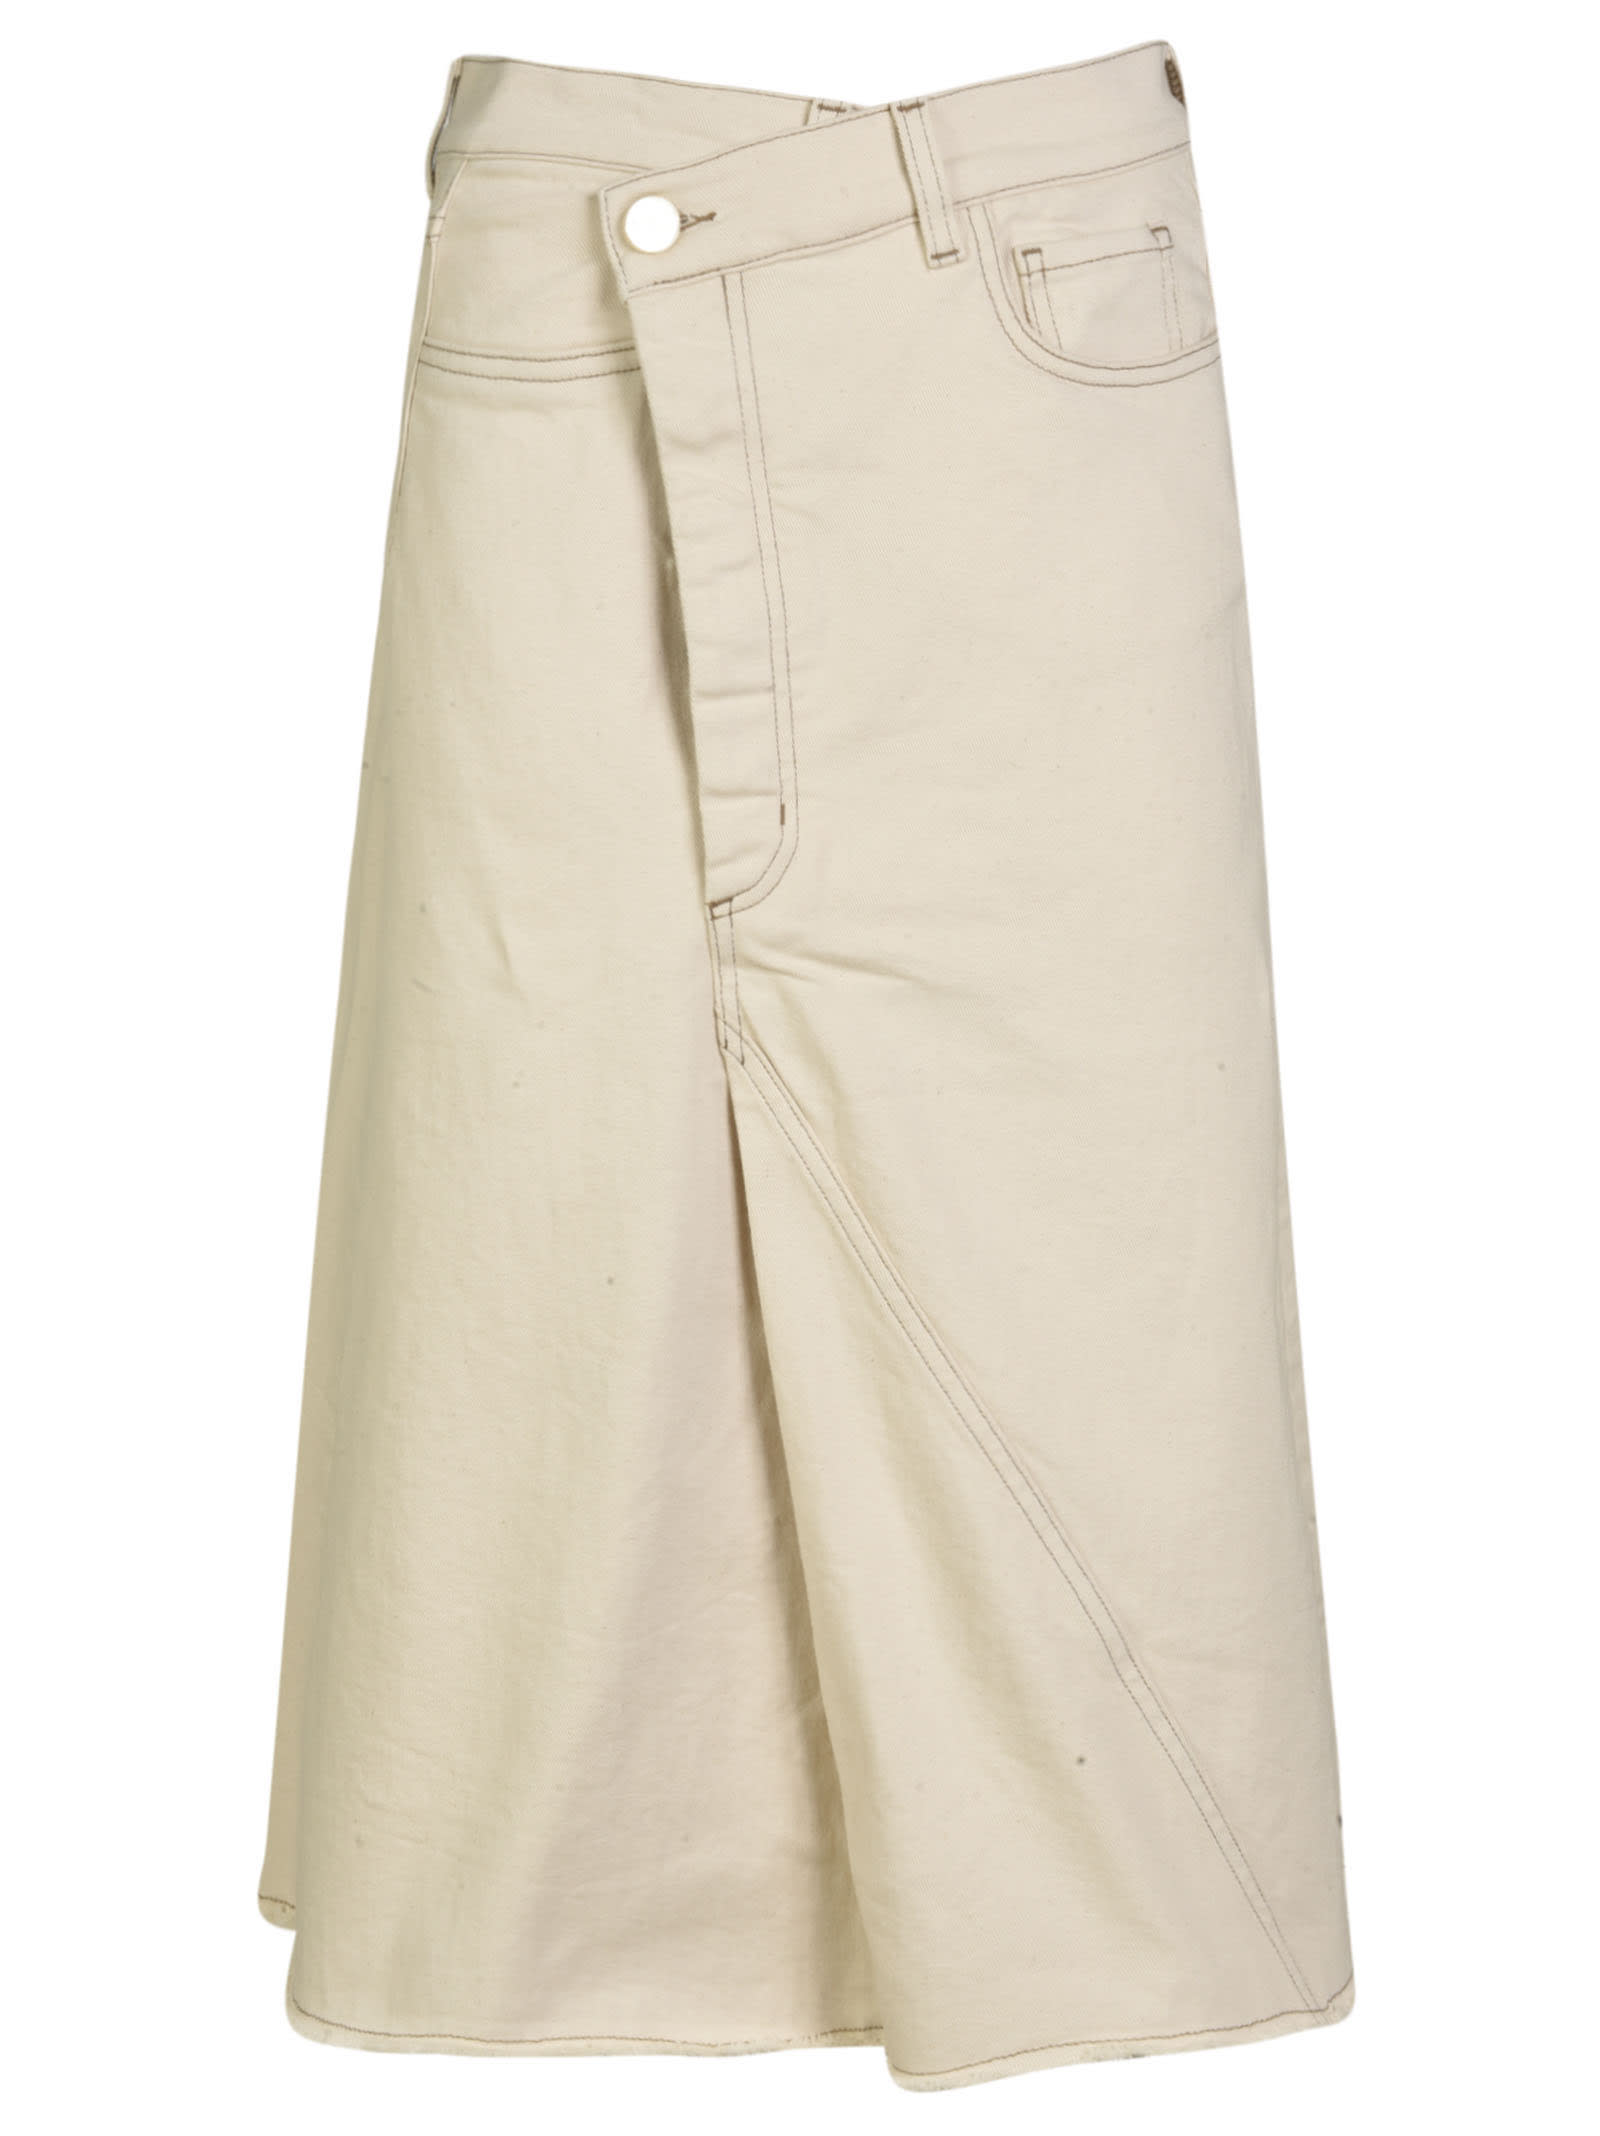 Erika Cavallini Mid-Length Buttoned Skirt